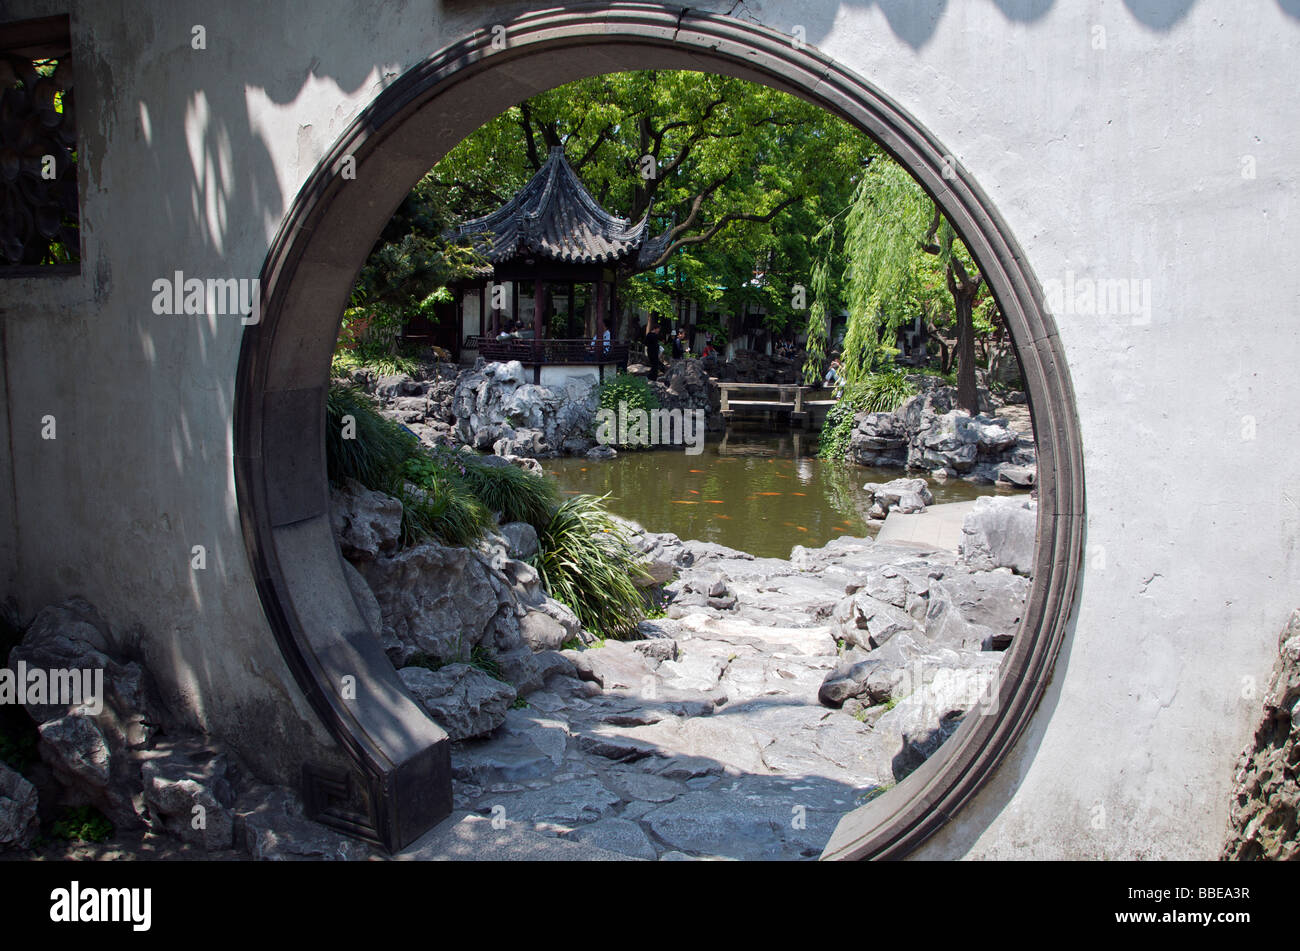 Moon gate or circular entrance into Yuyuan Gardens Old Town Shanghai China Stock Photo